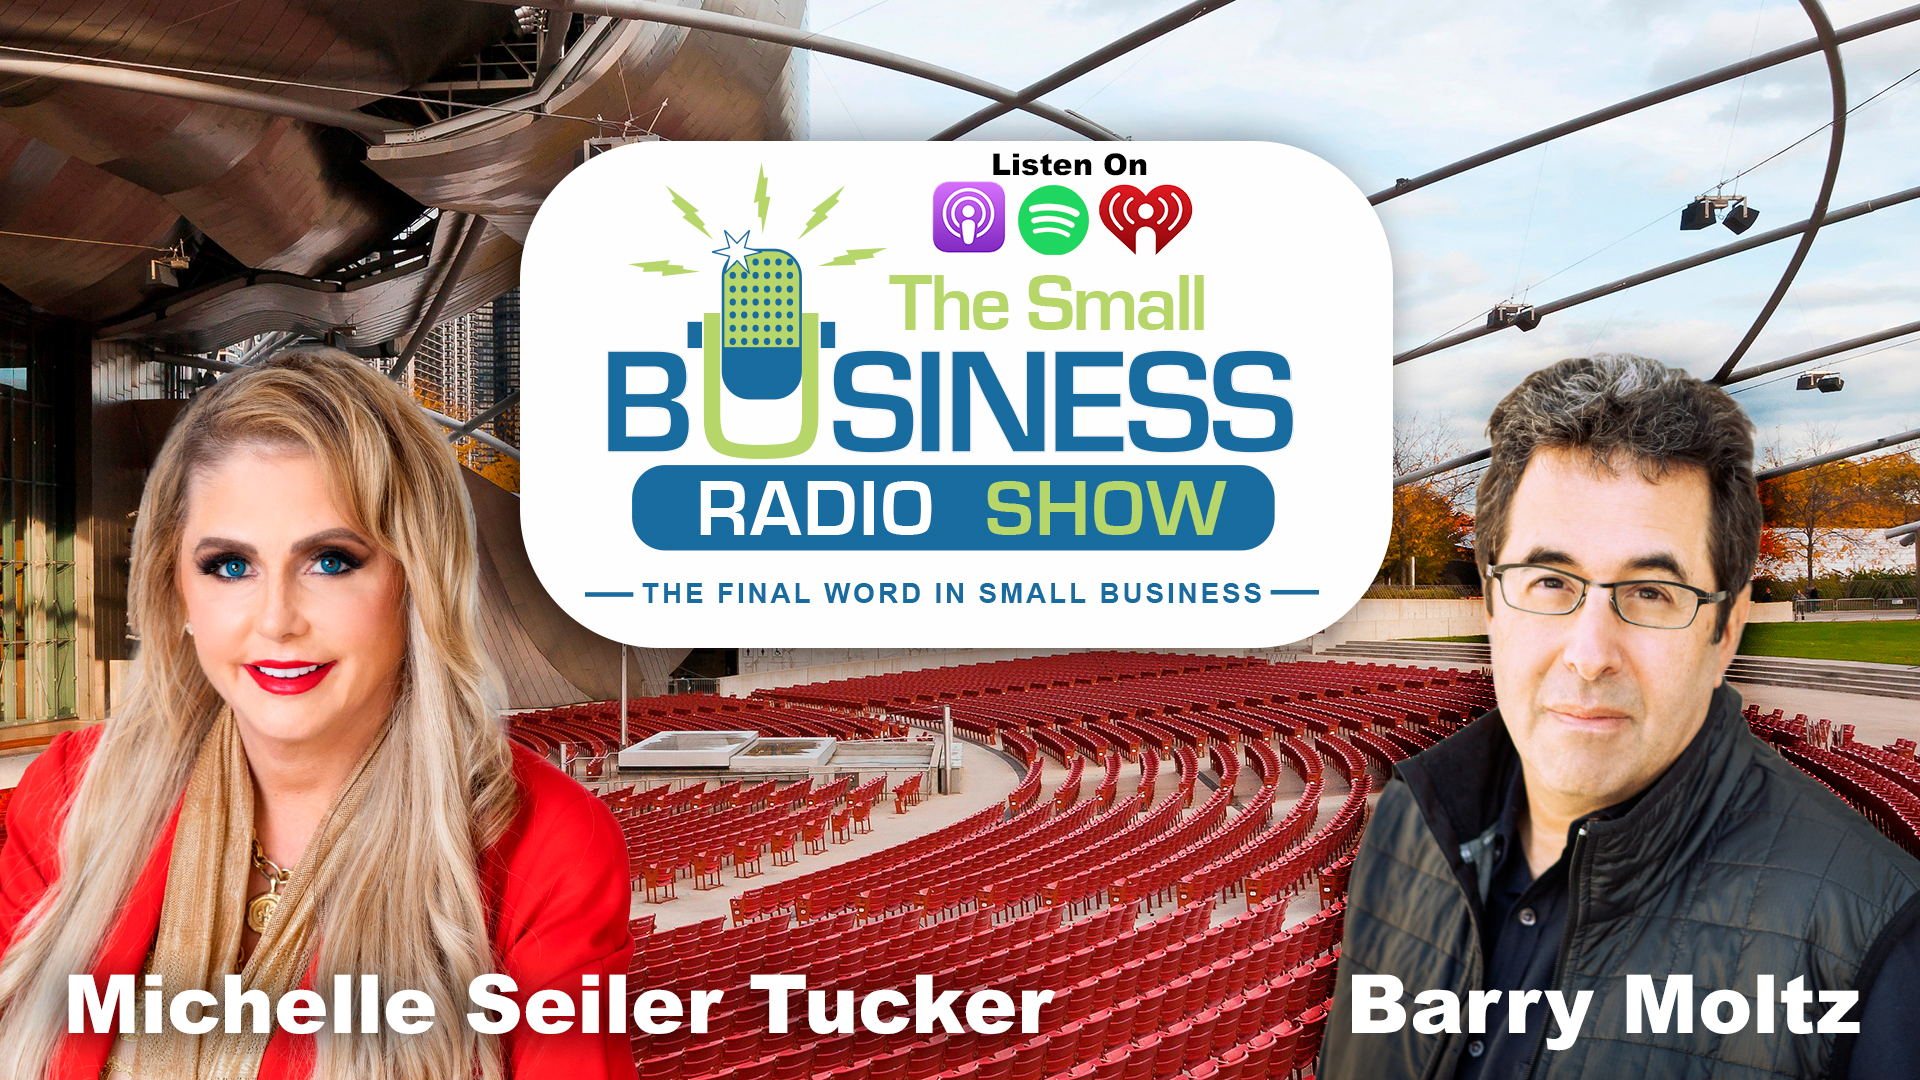 Michelle Seiler Tucker on The Small Business Radio Show